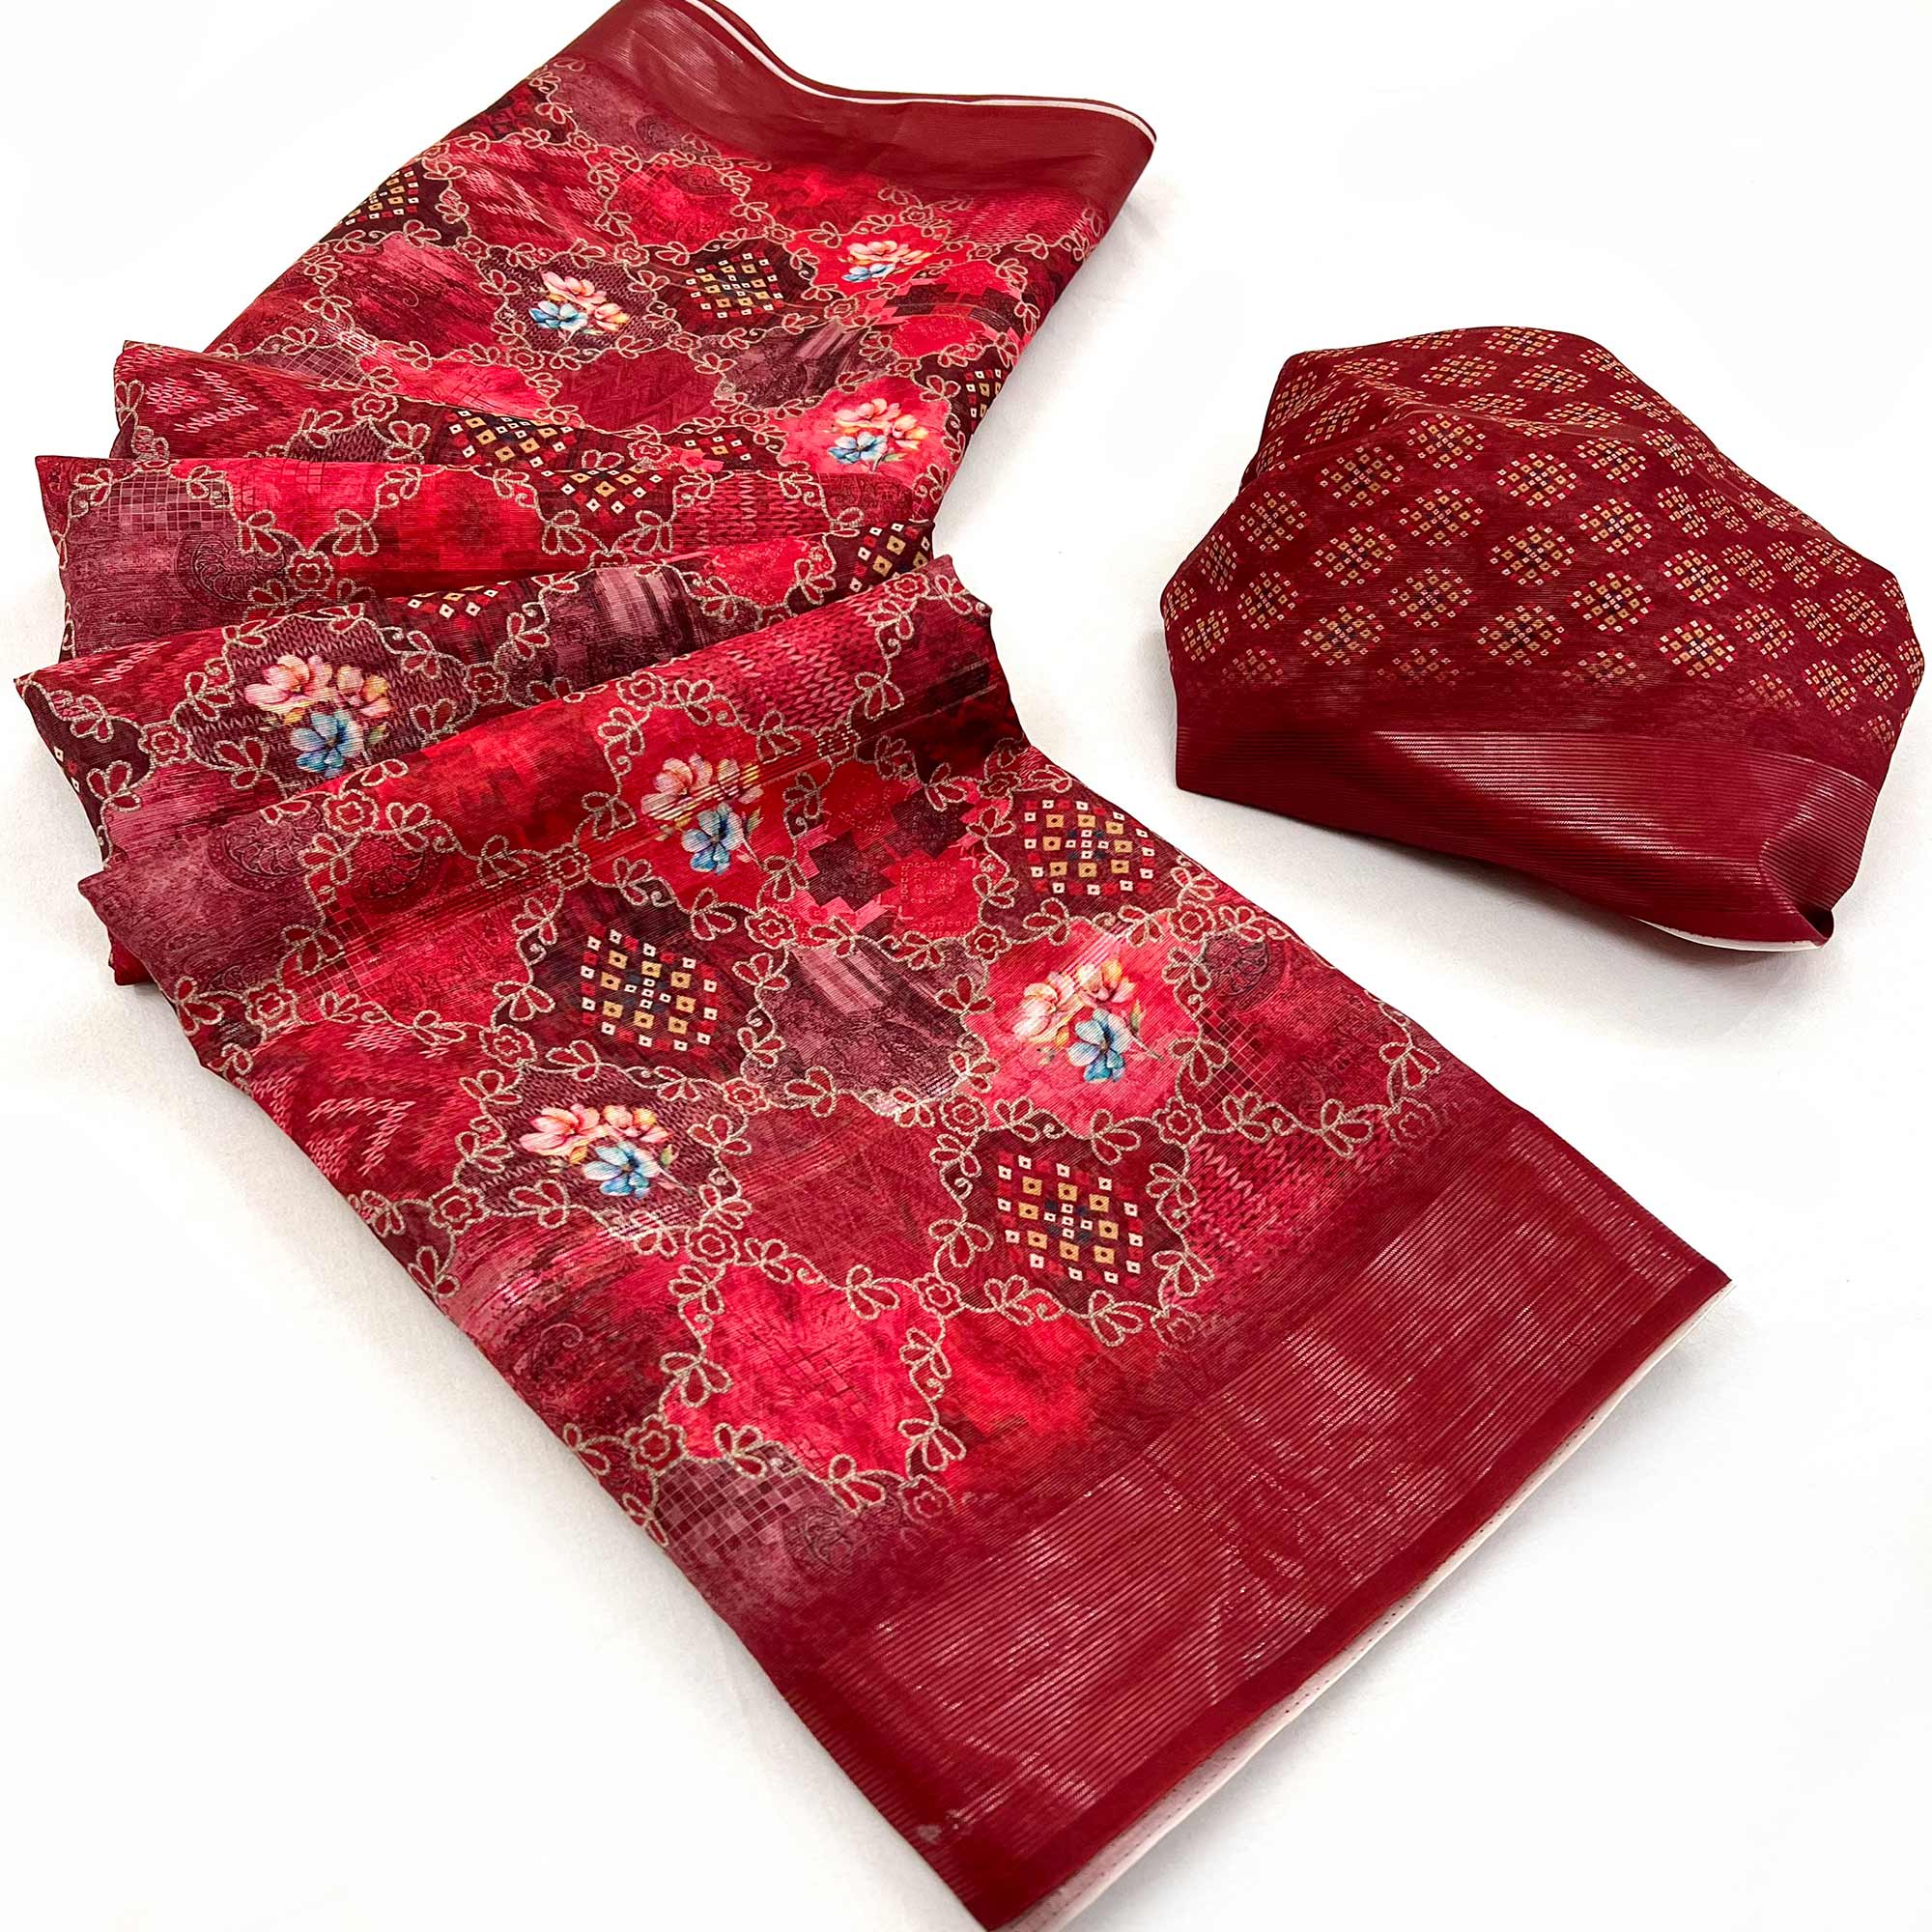 Red & Maroon Floral Digital Printed Cotton Blend Saree